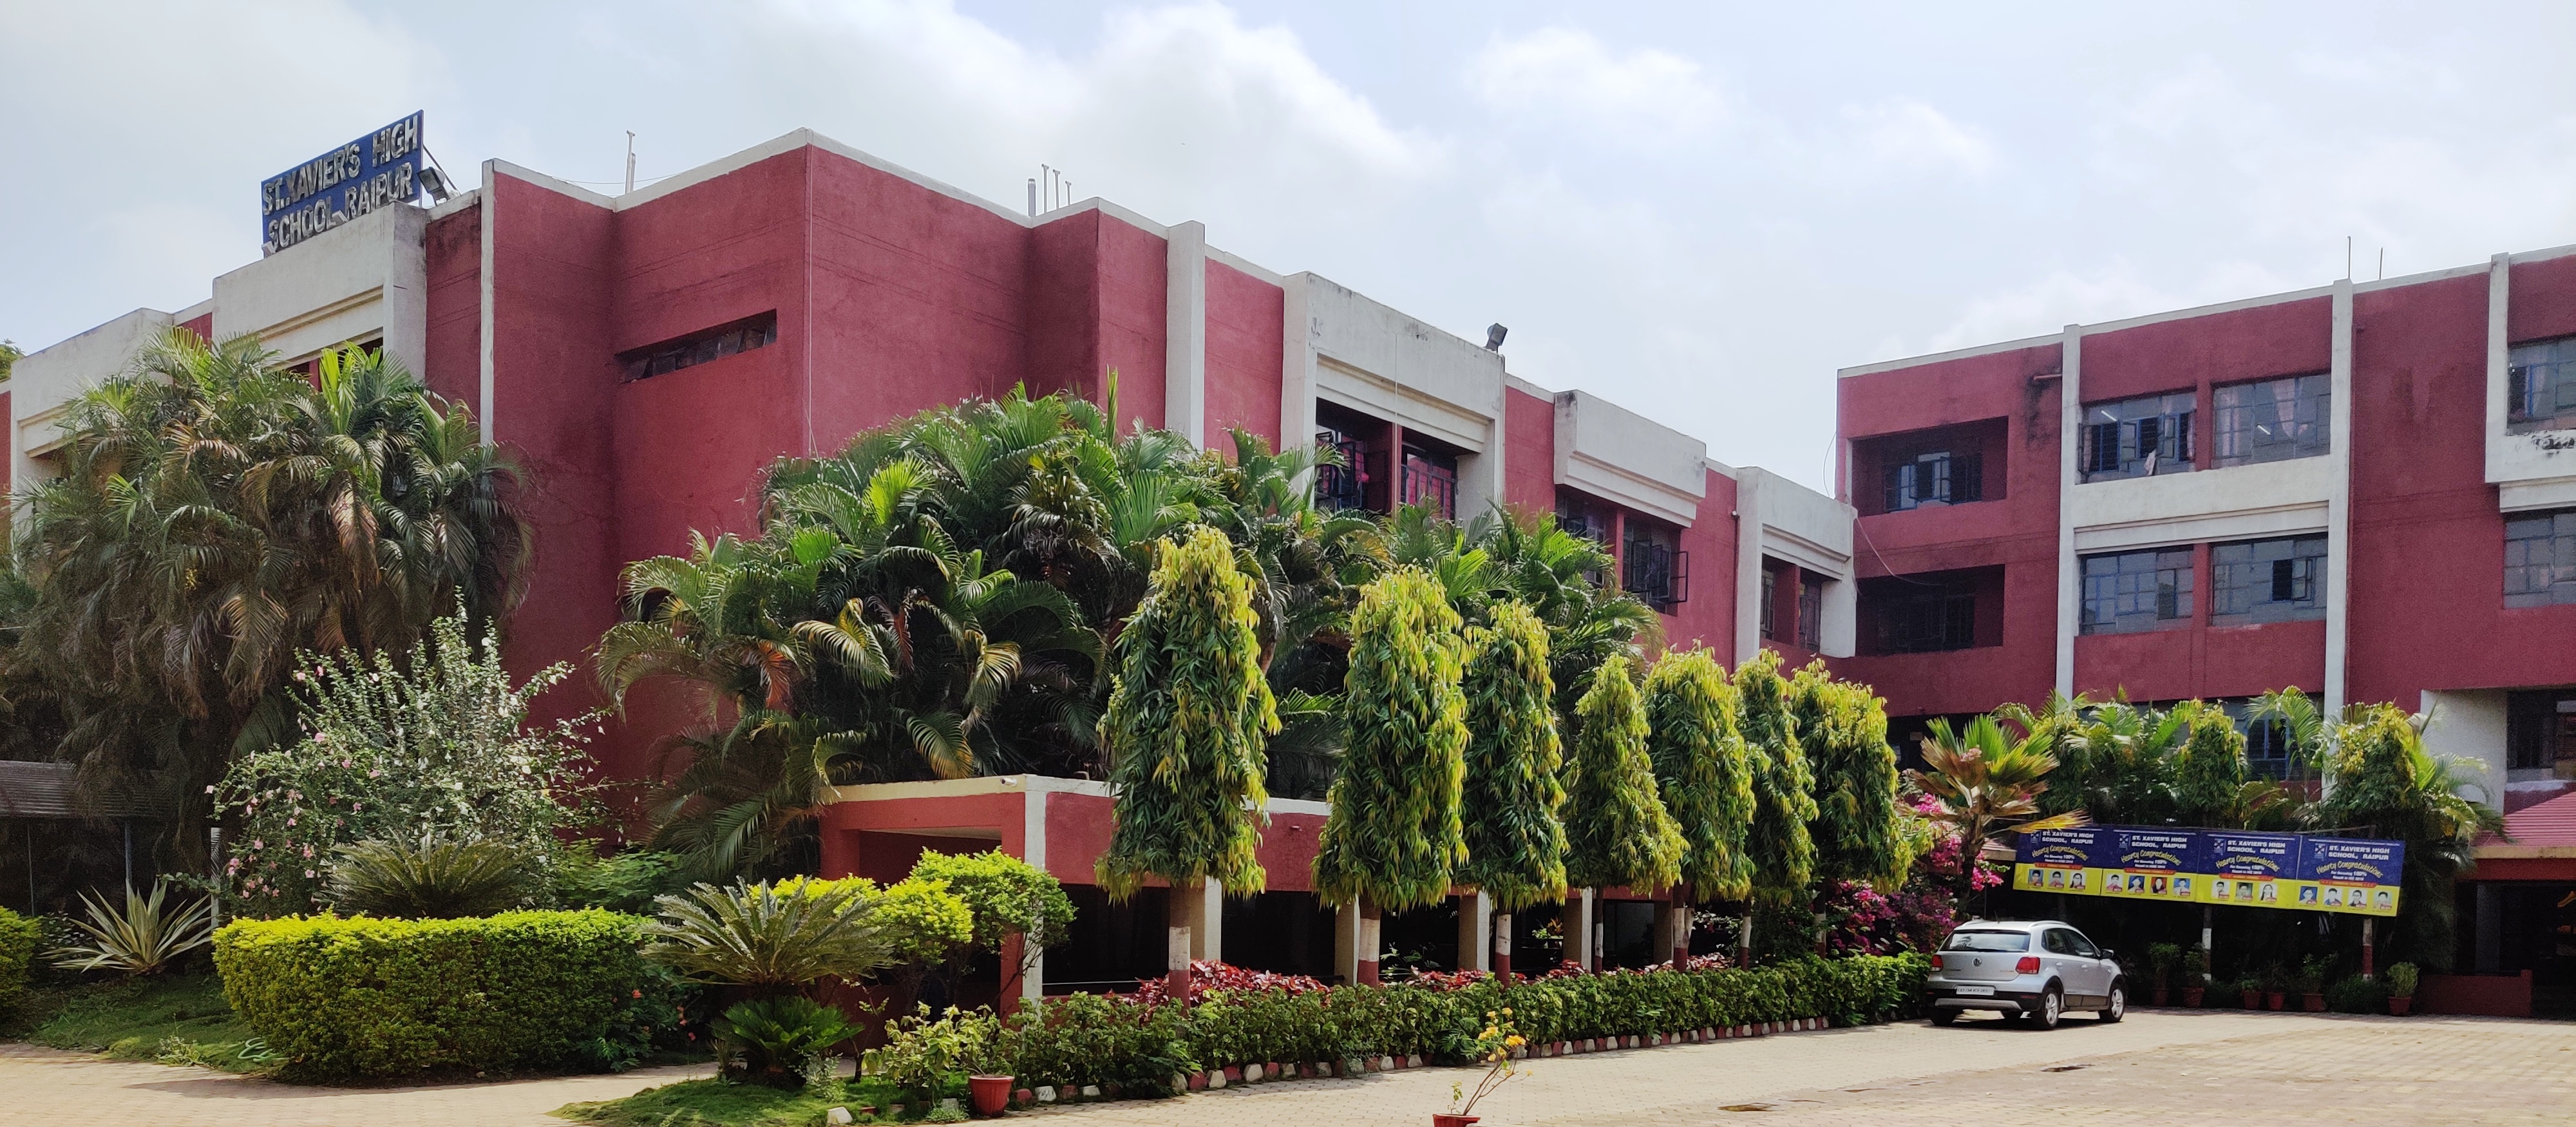 St. Xavier’s High School, Ravigram, Raipur - Reimagining Education